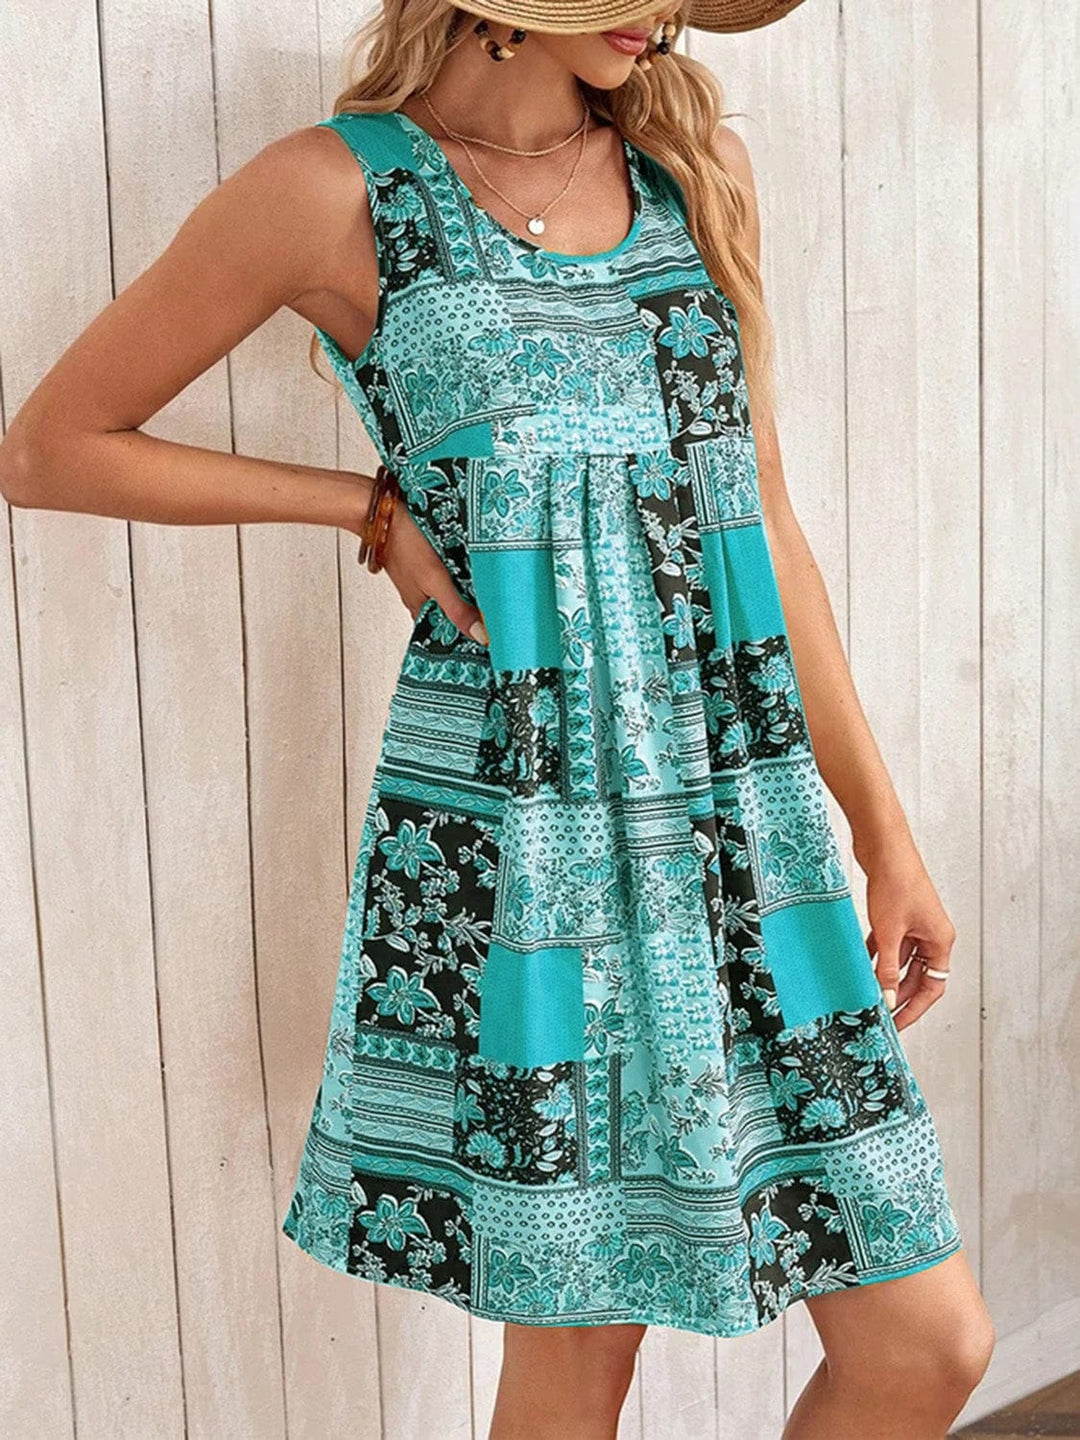 Trendsi dress Gypsy Fhy Sleeveless Mini Dress